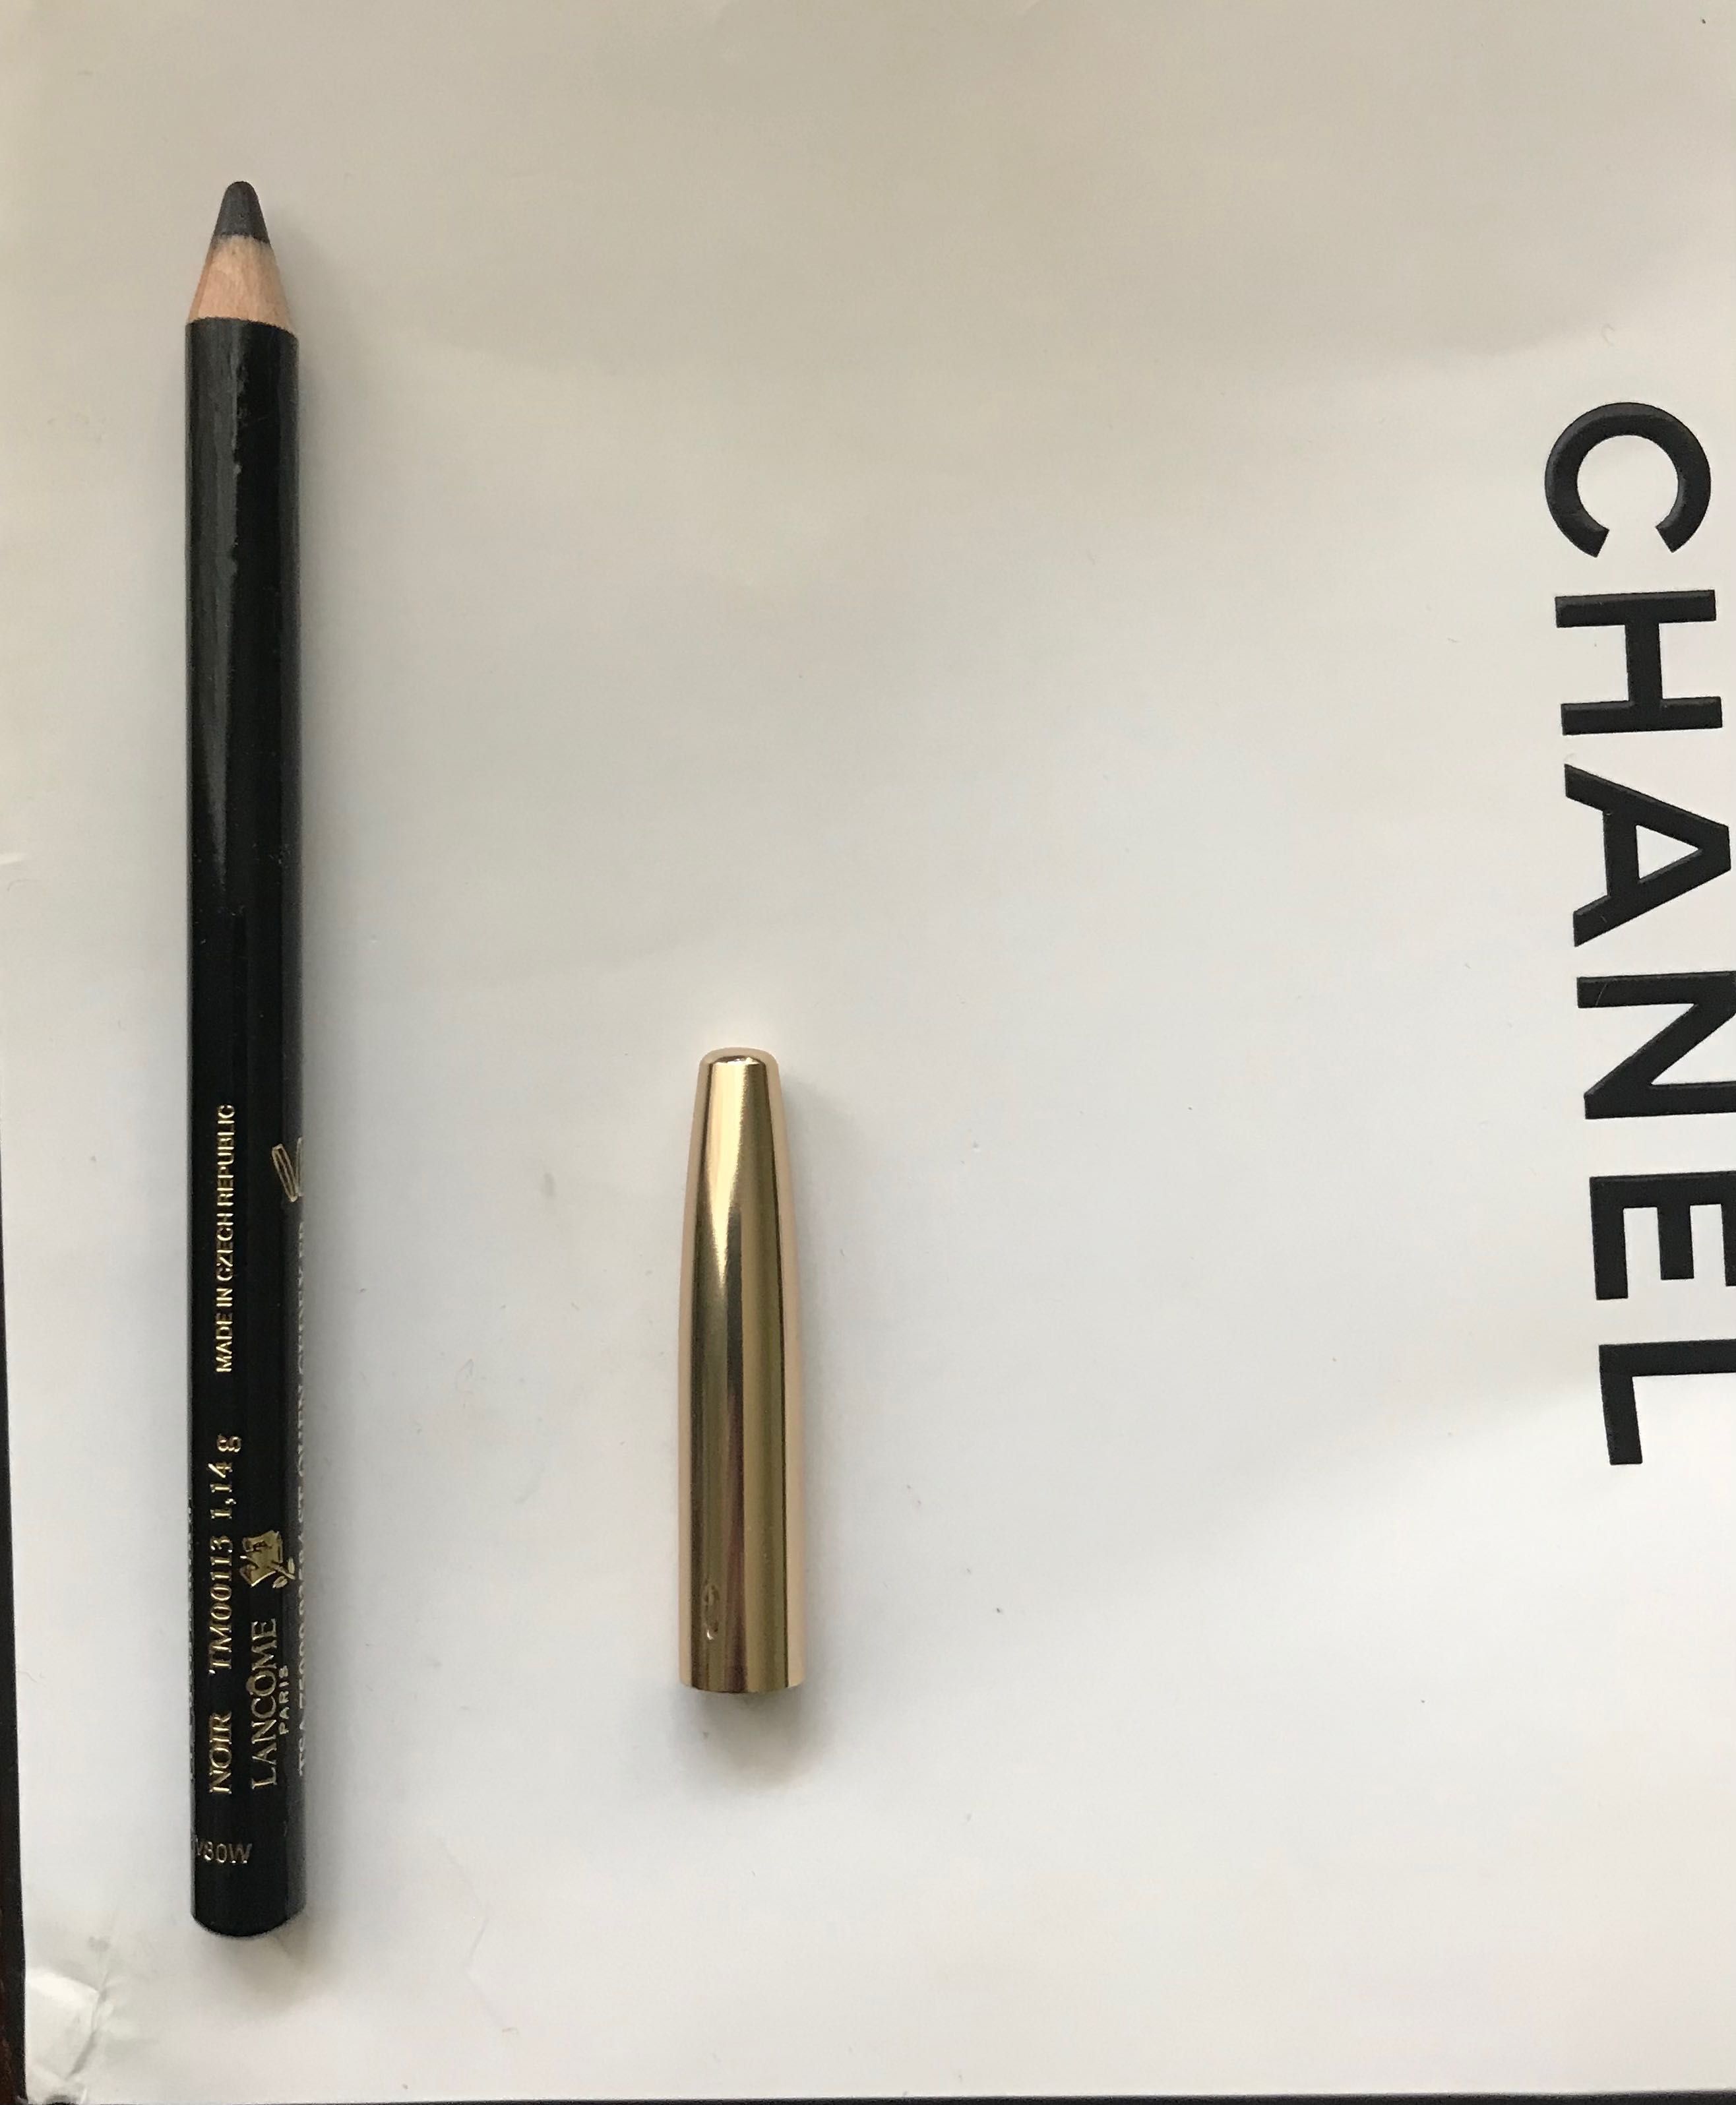 Lancome le crayon карандаш для глаз и пакет Chanel